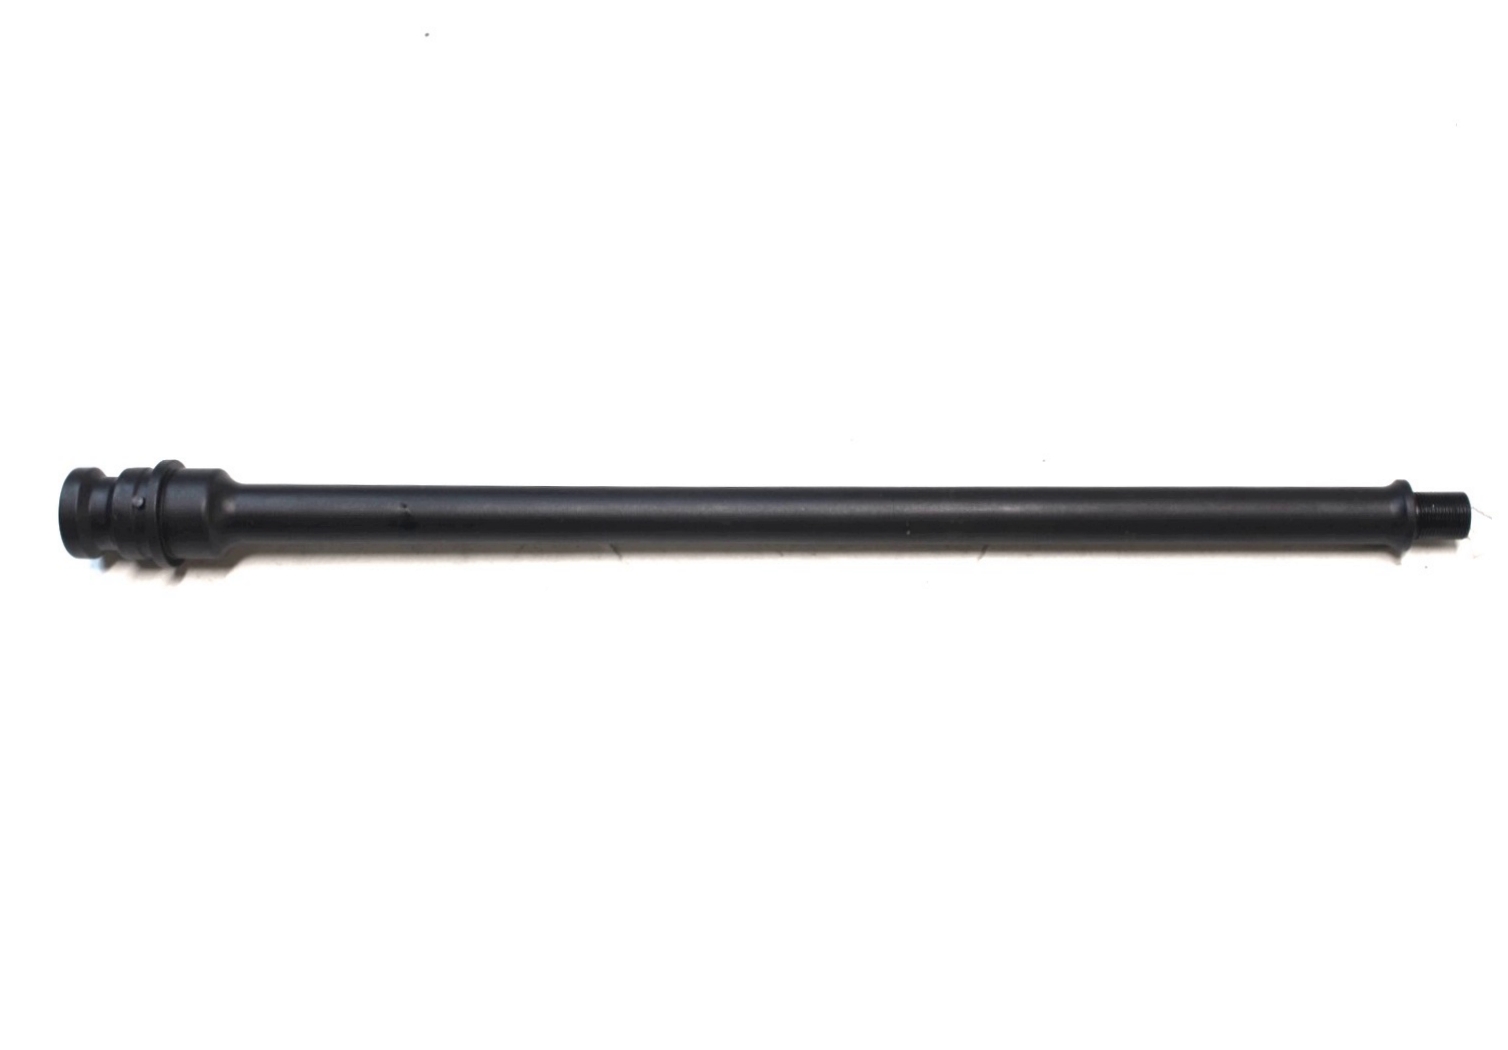 8 inch AR-15 9mm Pistol Caliber Melonite Barrel by Alpha Shooting Sports